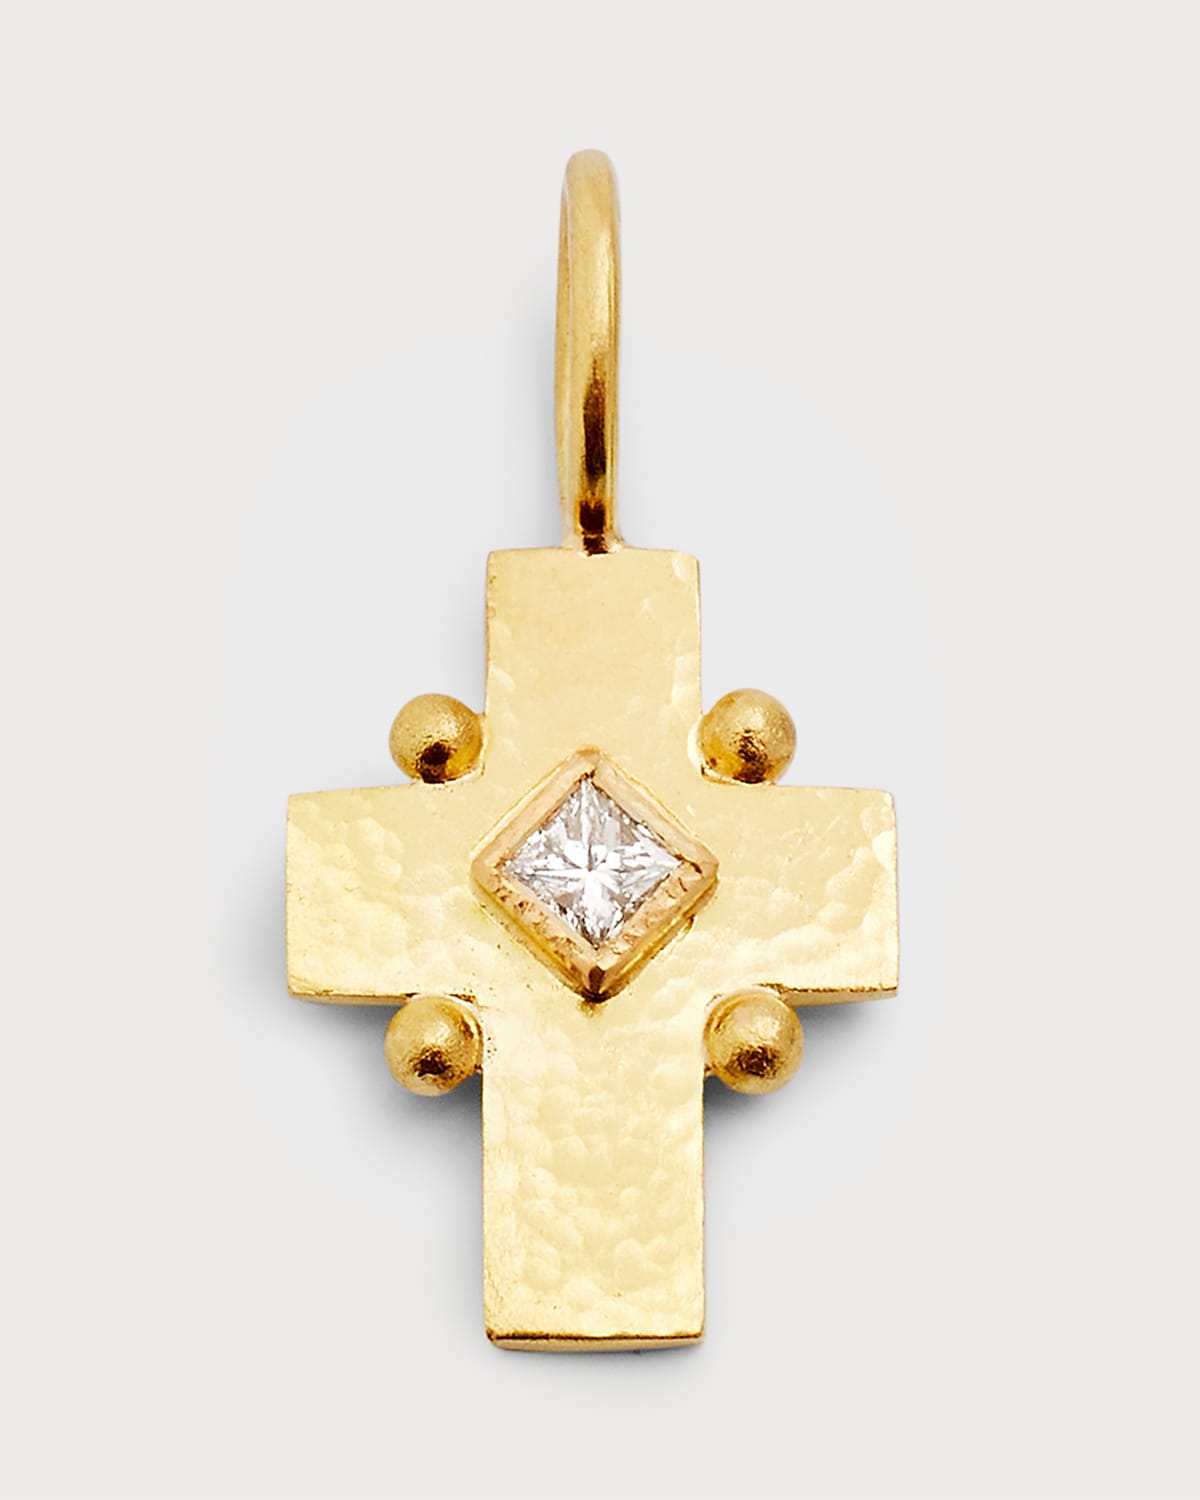 19K Gold Cross Pendant with Diamond, 19x10mm